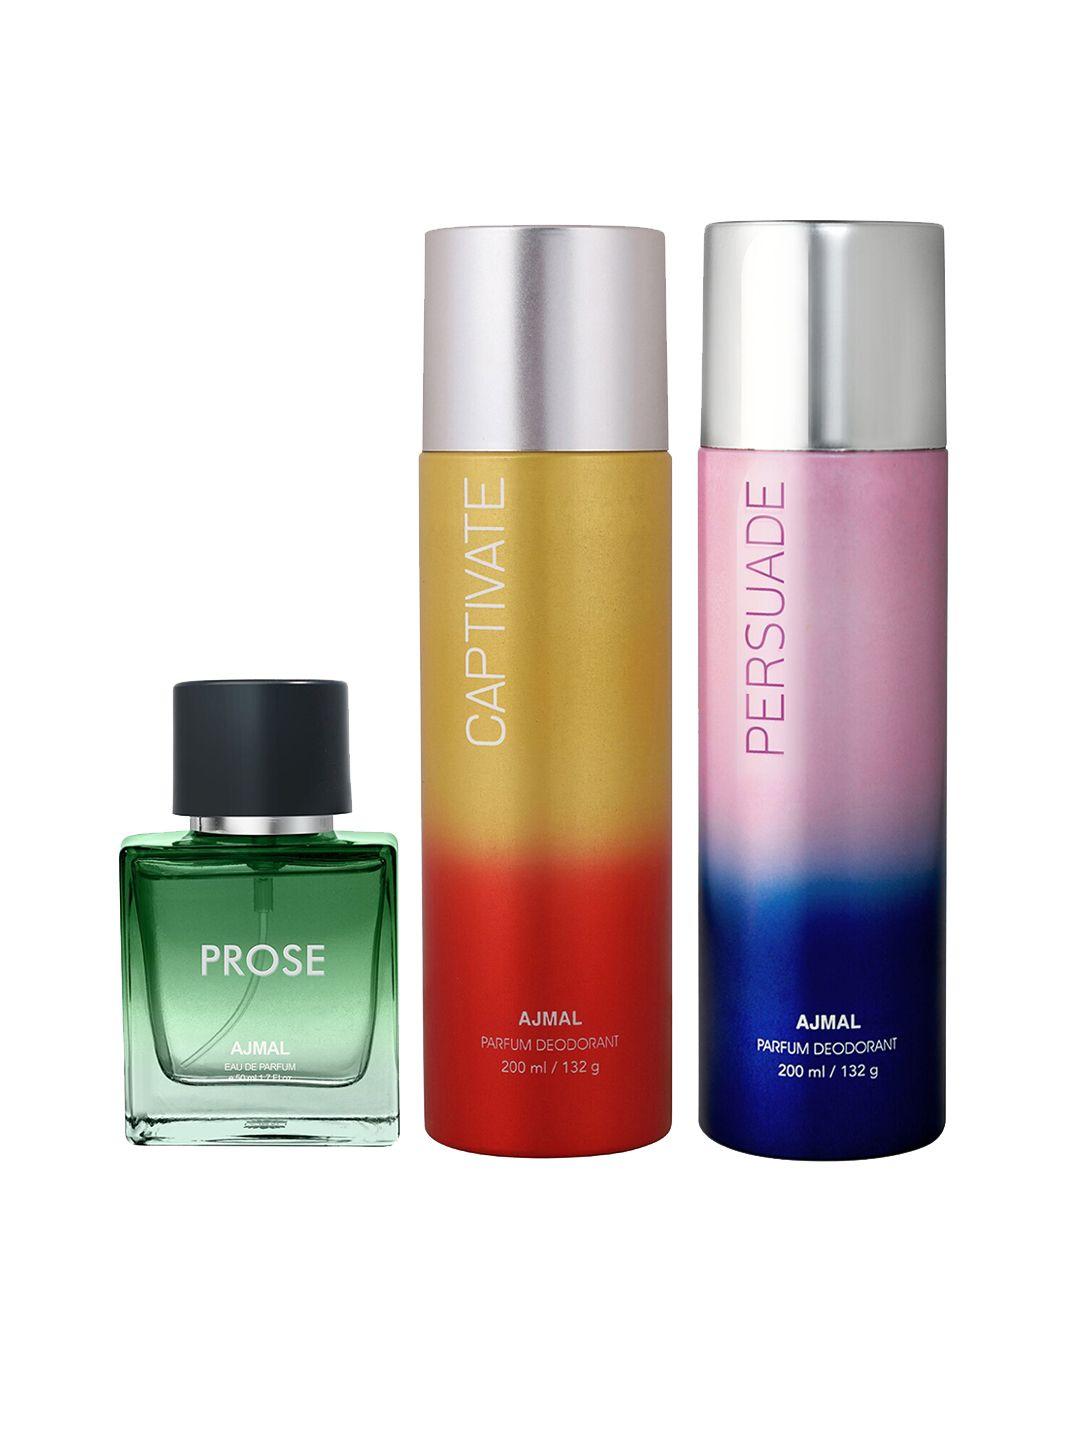 ajmal prose eau de parfum 50ml with captivate & persuade deodorant 200ml each